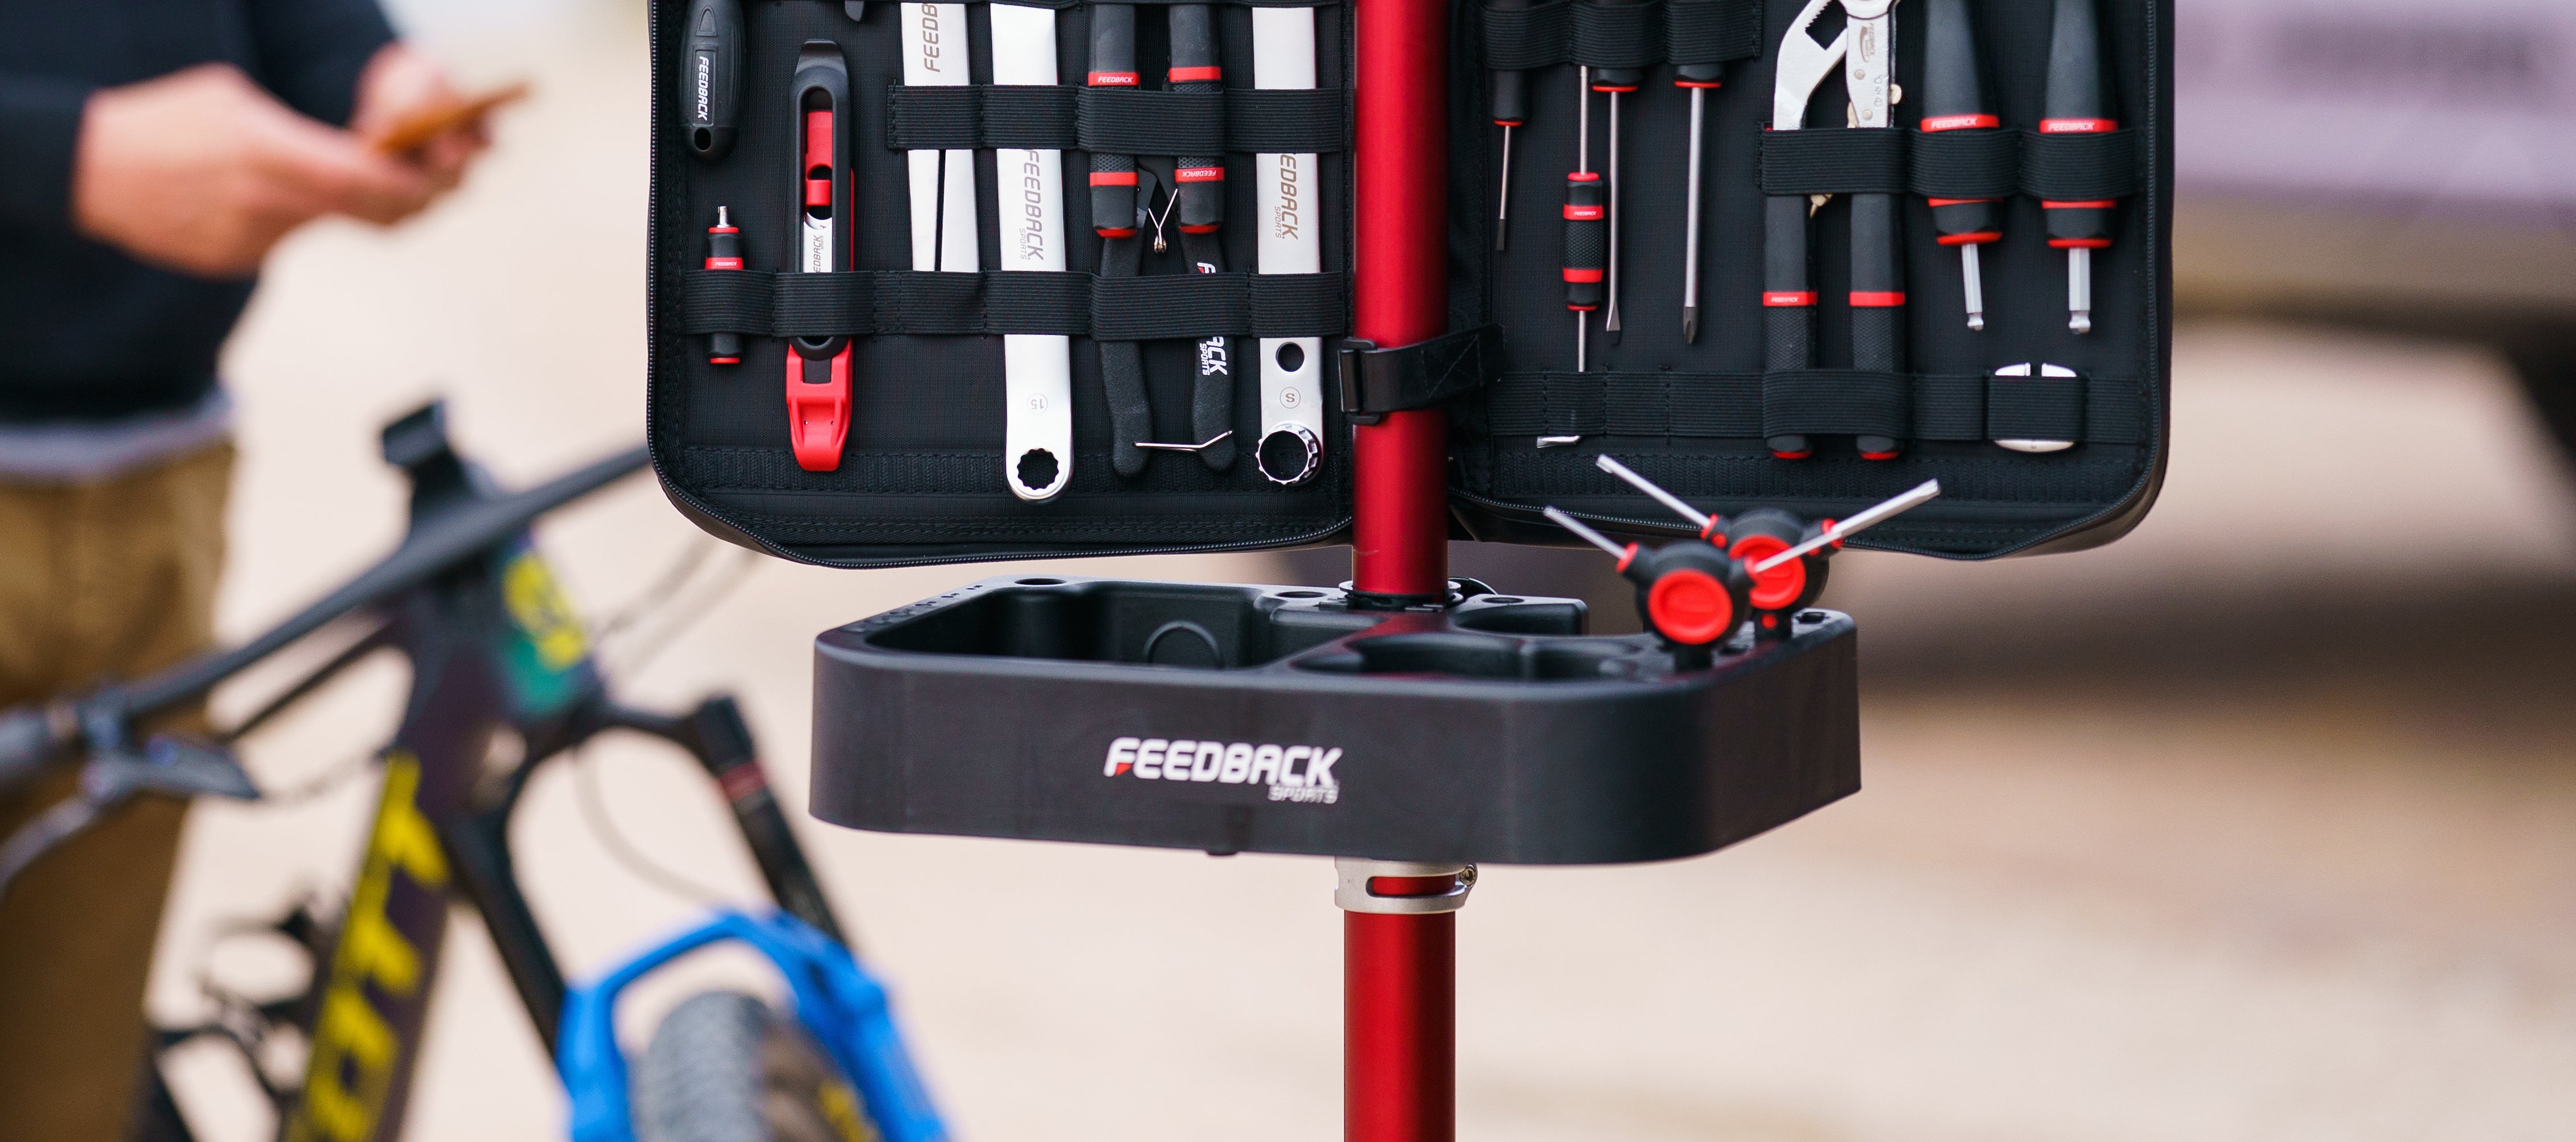 Portable, Feedback - Trainers Sports Bike Compact Lightweight,